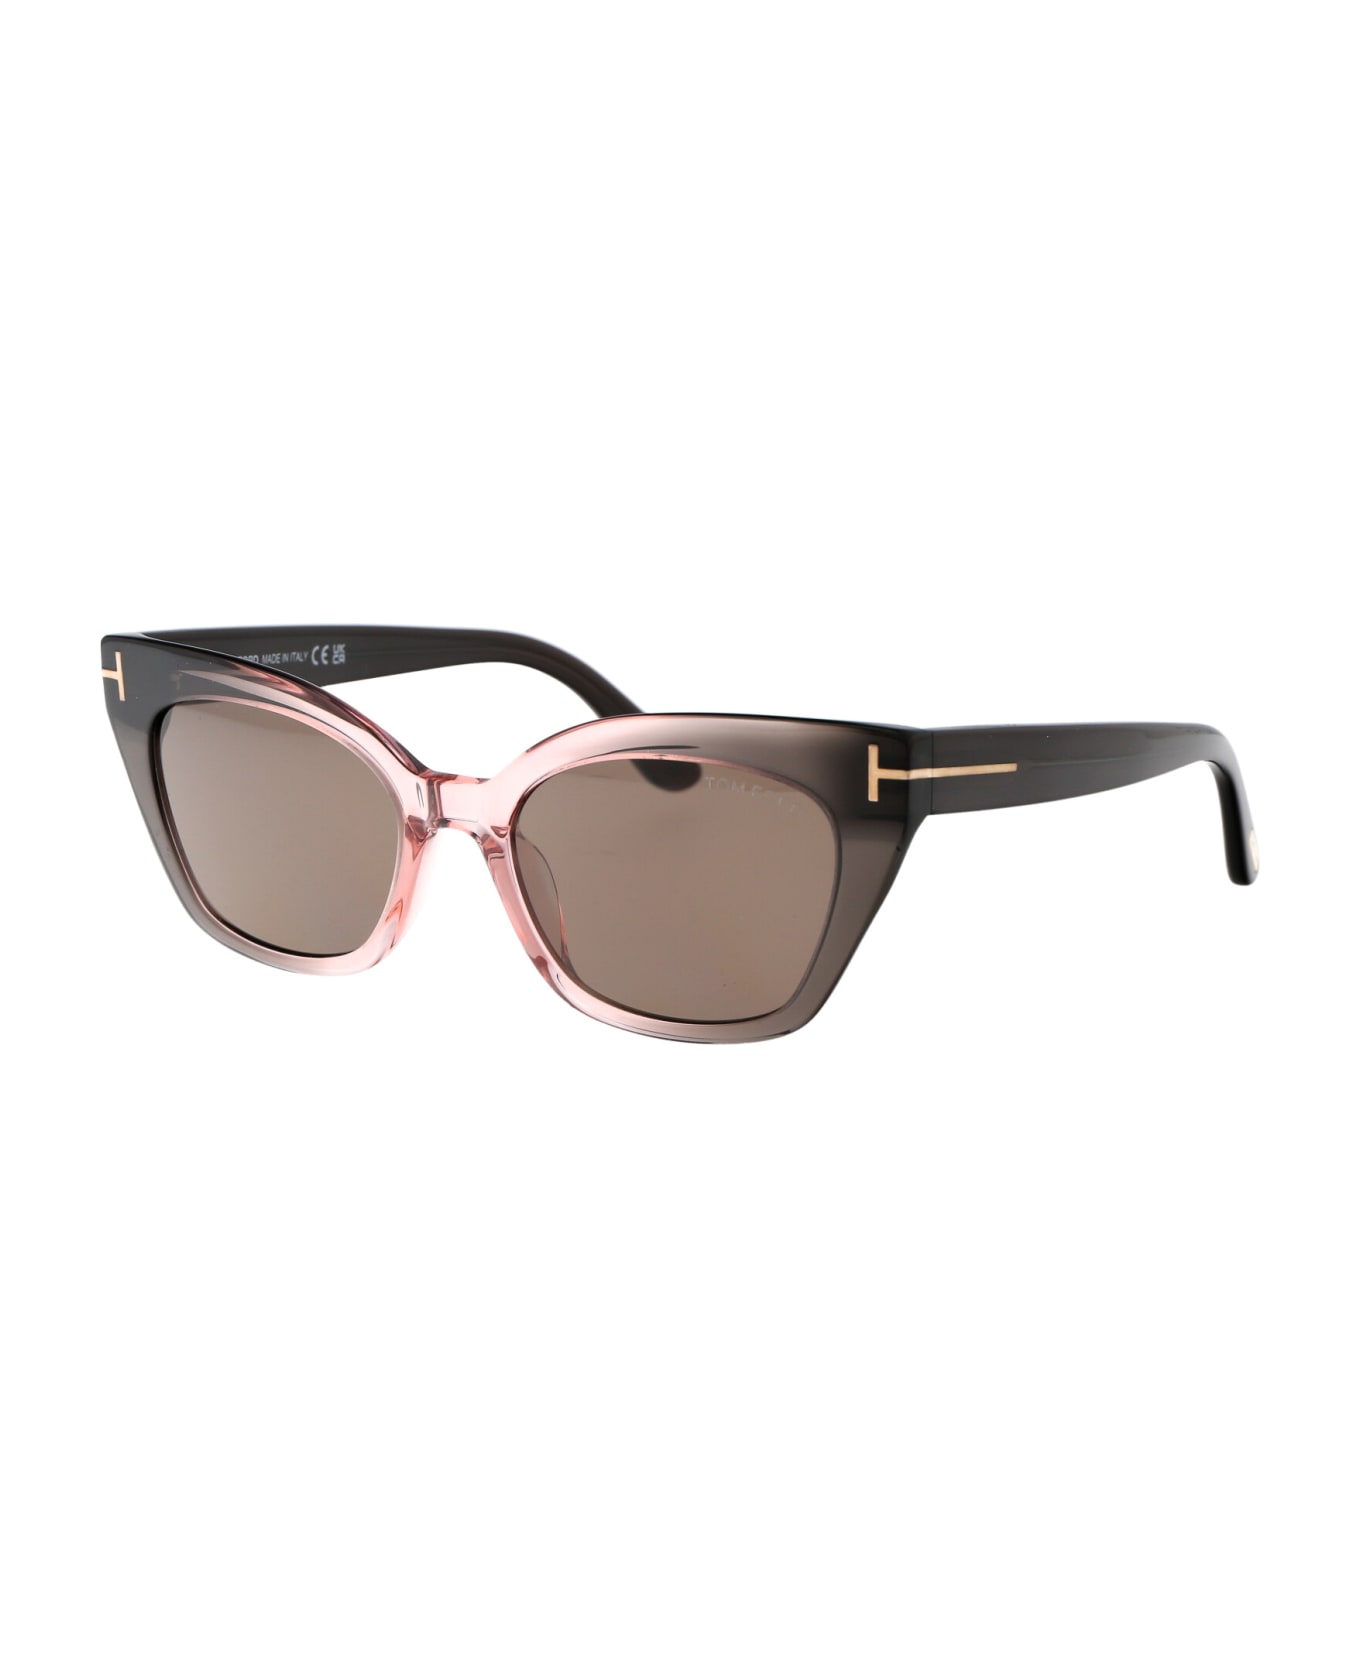 Tom Ford Eyewear Juliette Sunglasses - 20J Grigio/Altro / Roviex